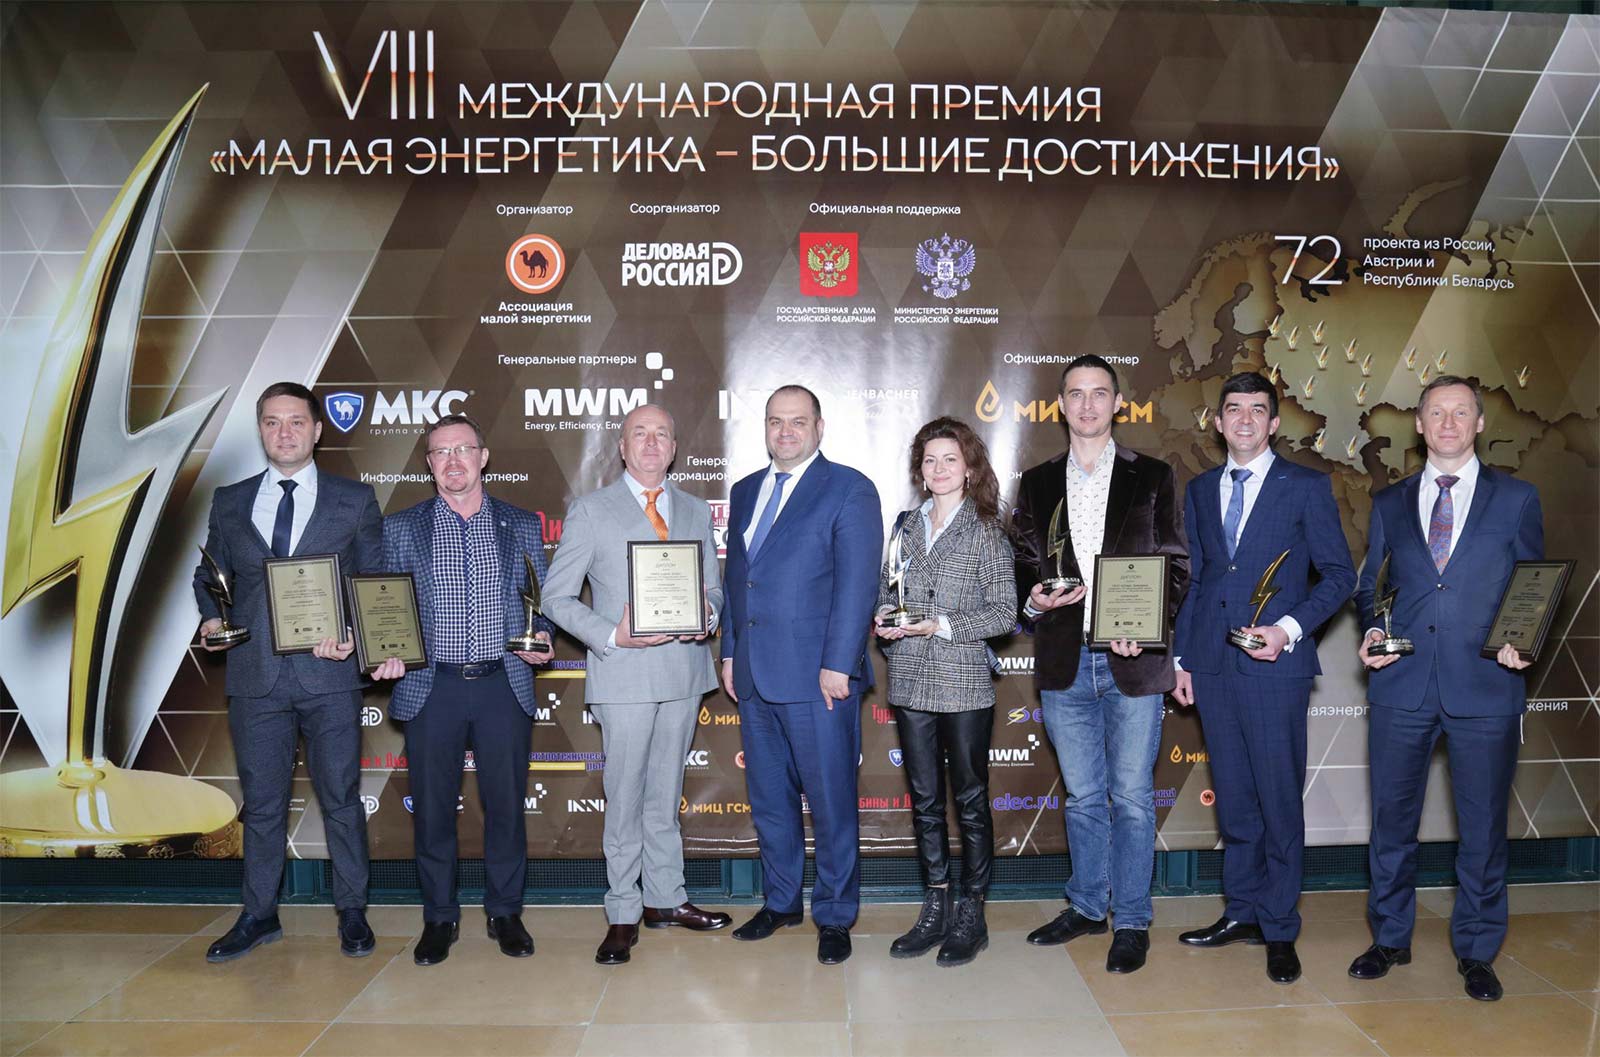 Golden lightning award ceremony in Moscow